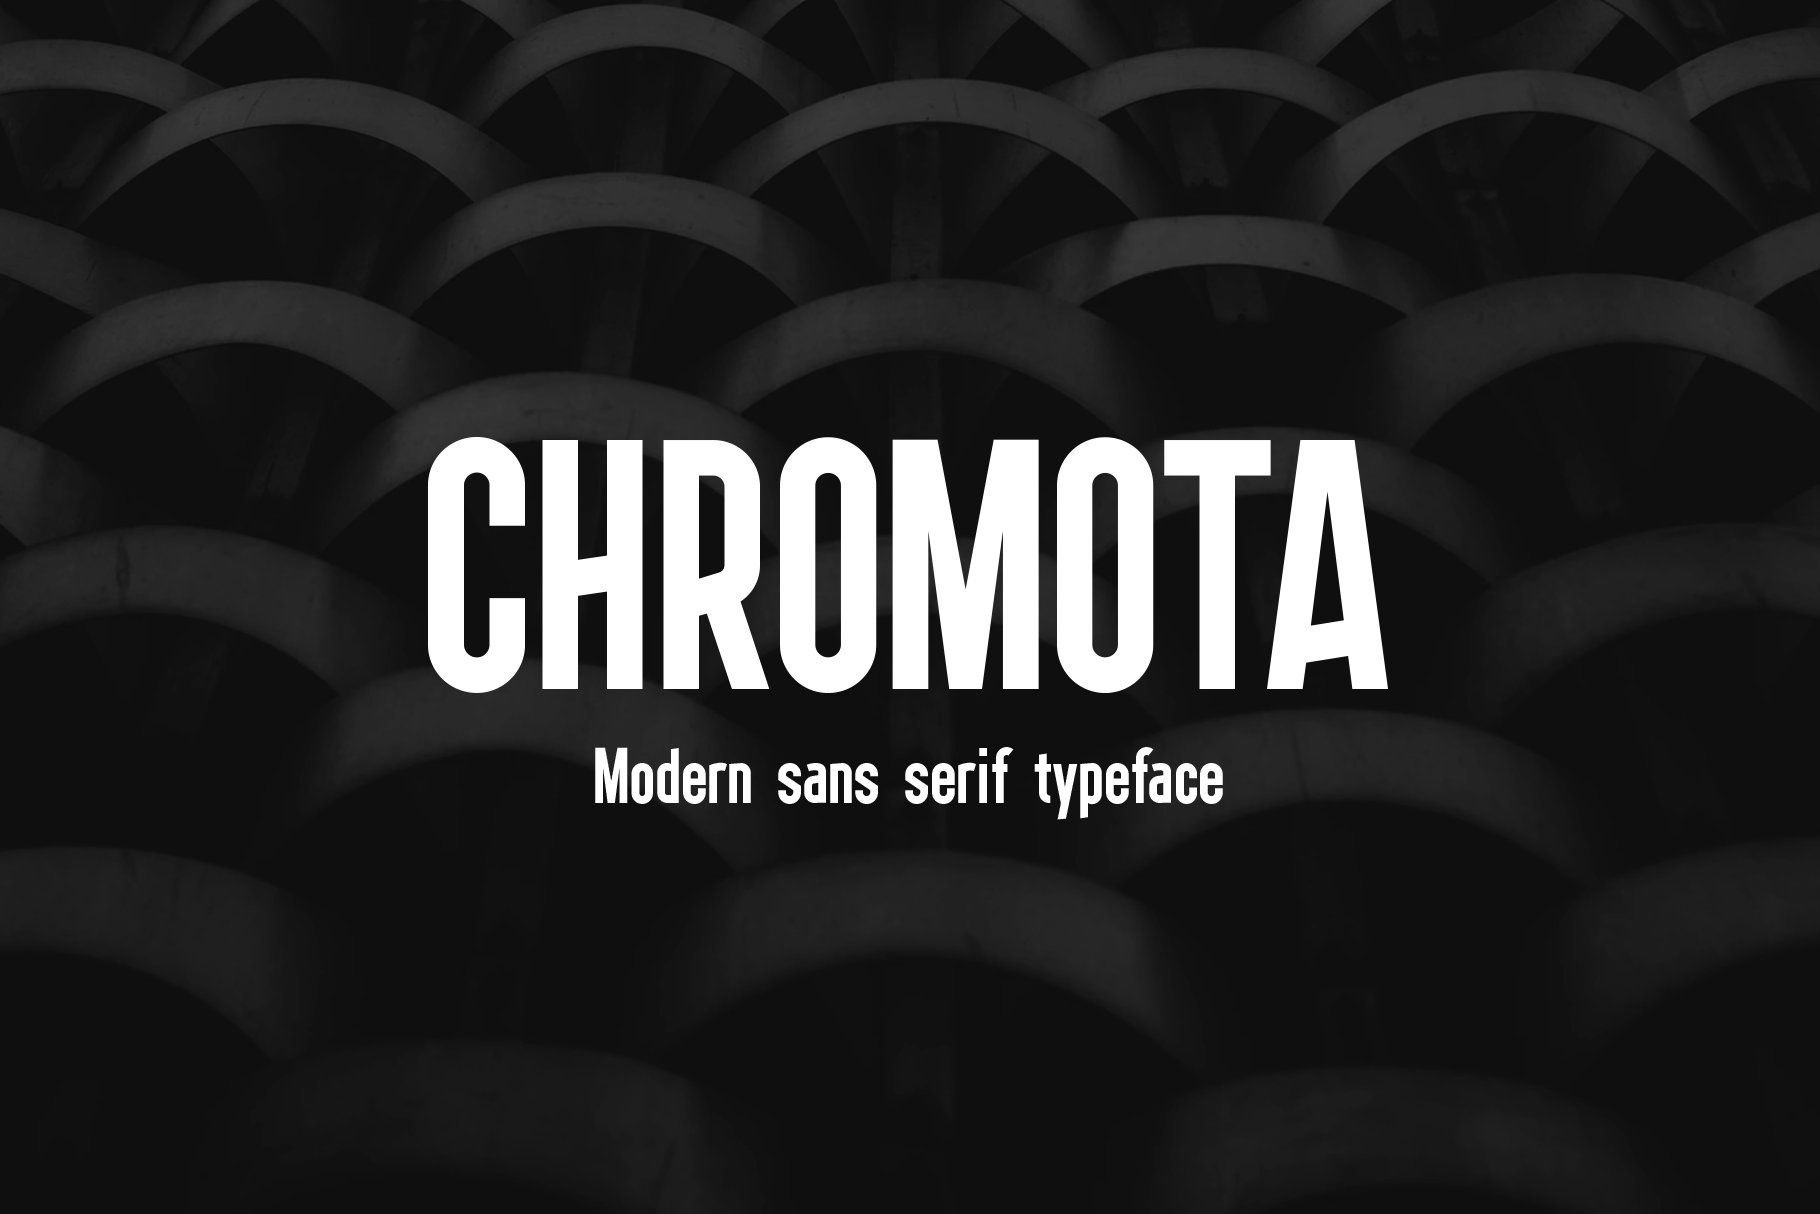 Chromota Font cover image.